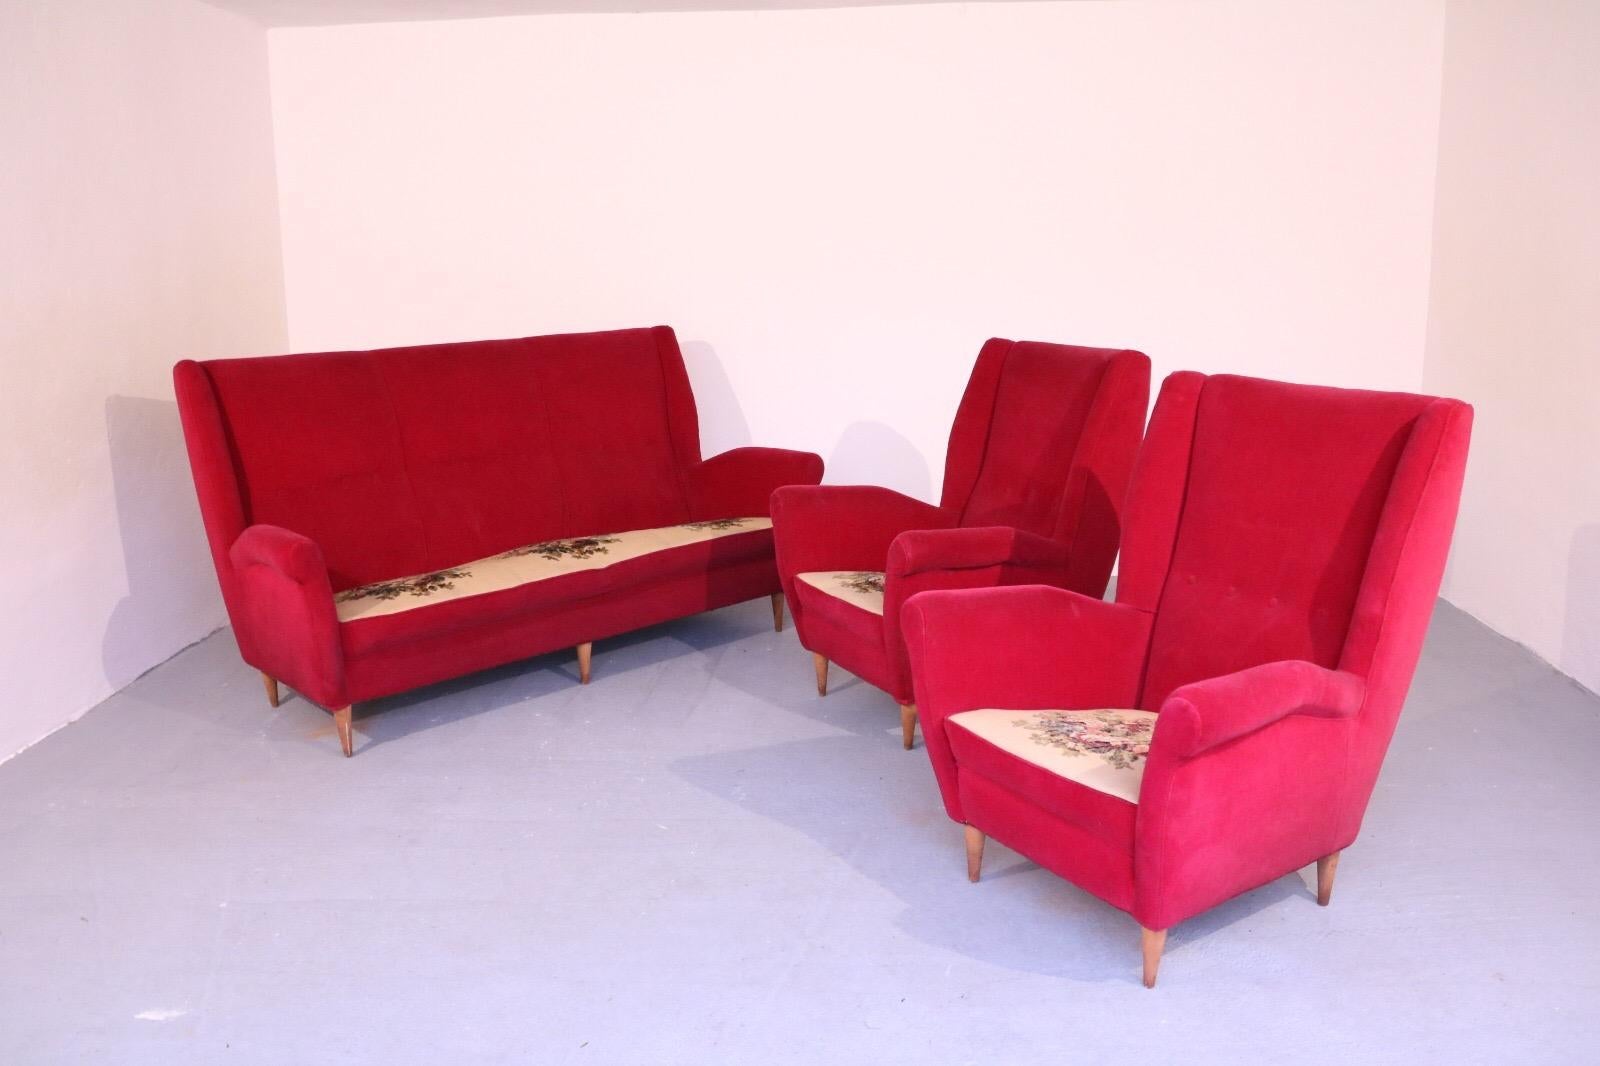 20th Century ItalianModern Neoclassical Sofa & Armchairs by Gio Ponti for ISA, Bergamo, 1955